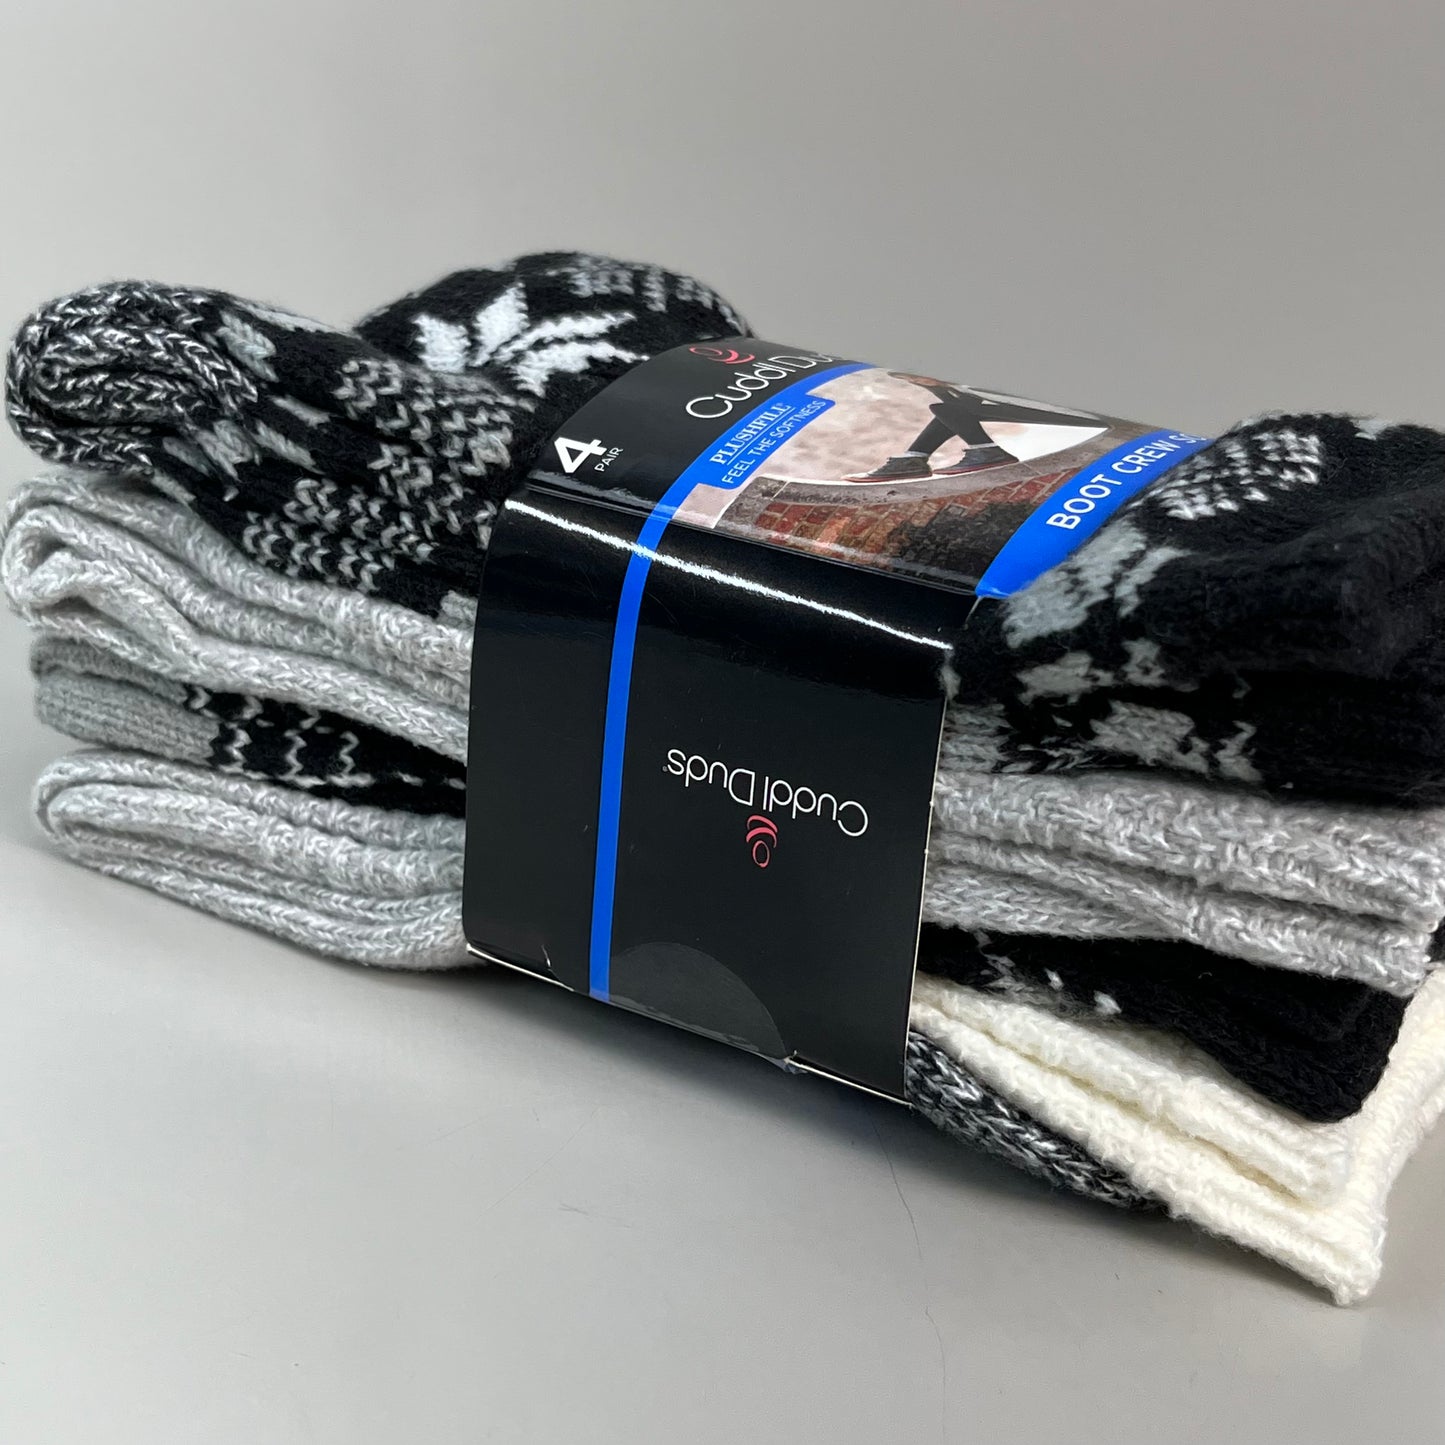 CUDDLE DUDS Soft Boot Crew Socks Plushfill 4 Pair Sz 4-10 Black Check (New)